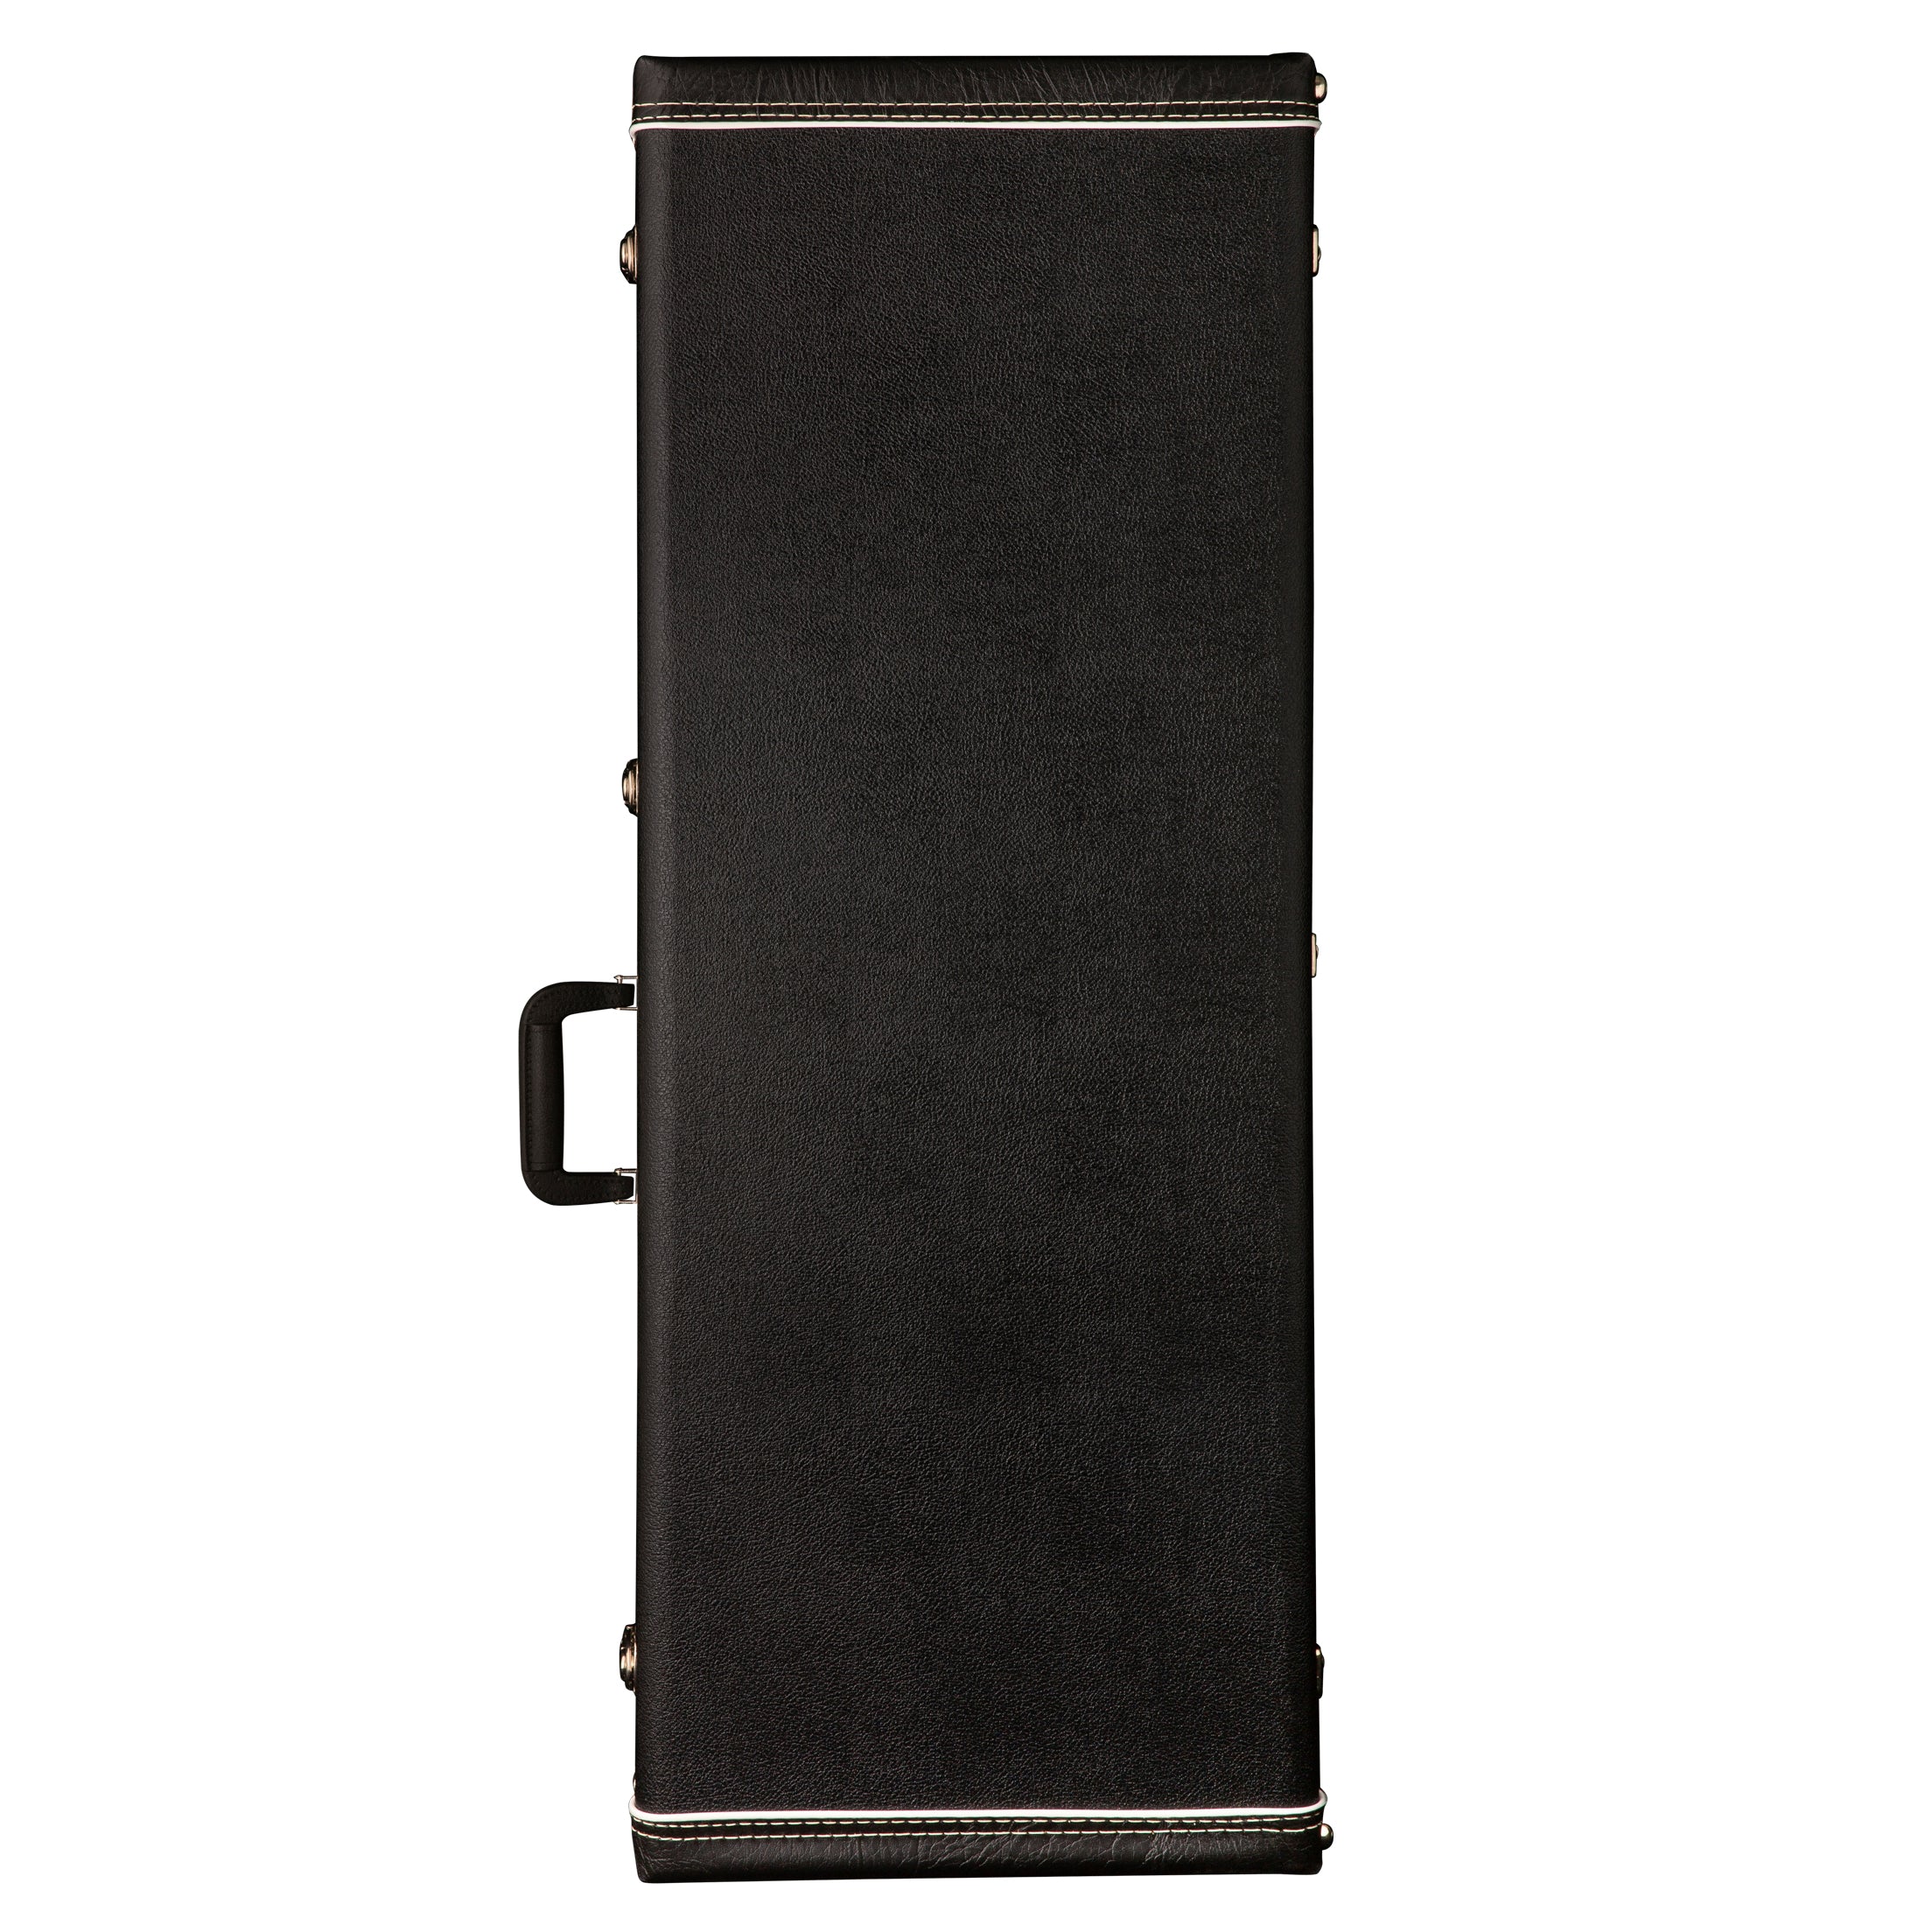 PRS Multi fit Guitar Case - Black - HIENDGUITAR   PRS hard case